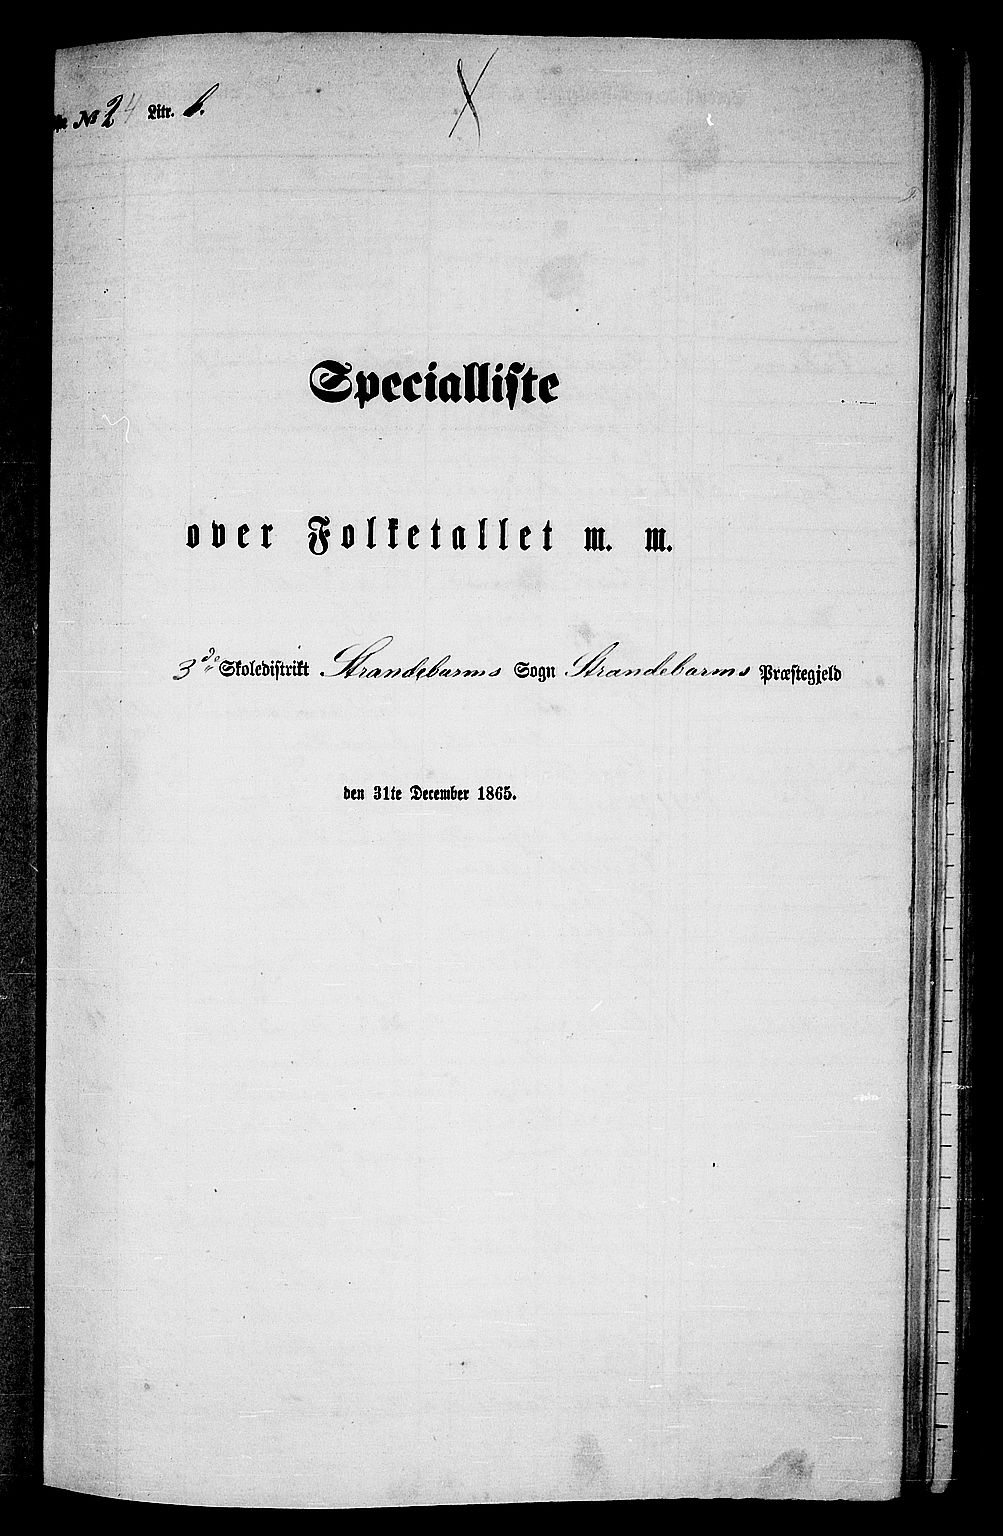 RA, Folketelling 1865 for 1226P Strandebarm prestegjeld, 1865, s. 81